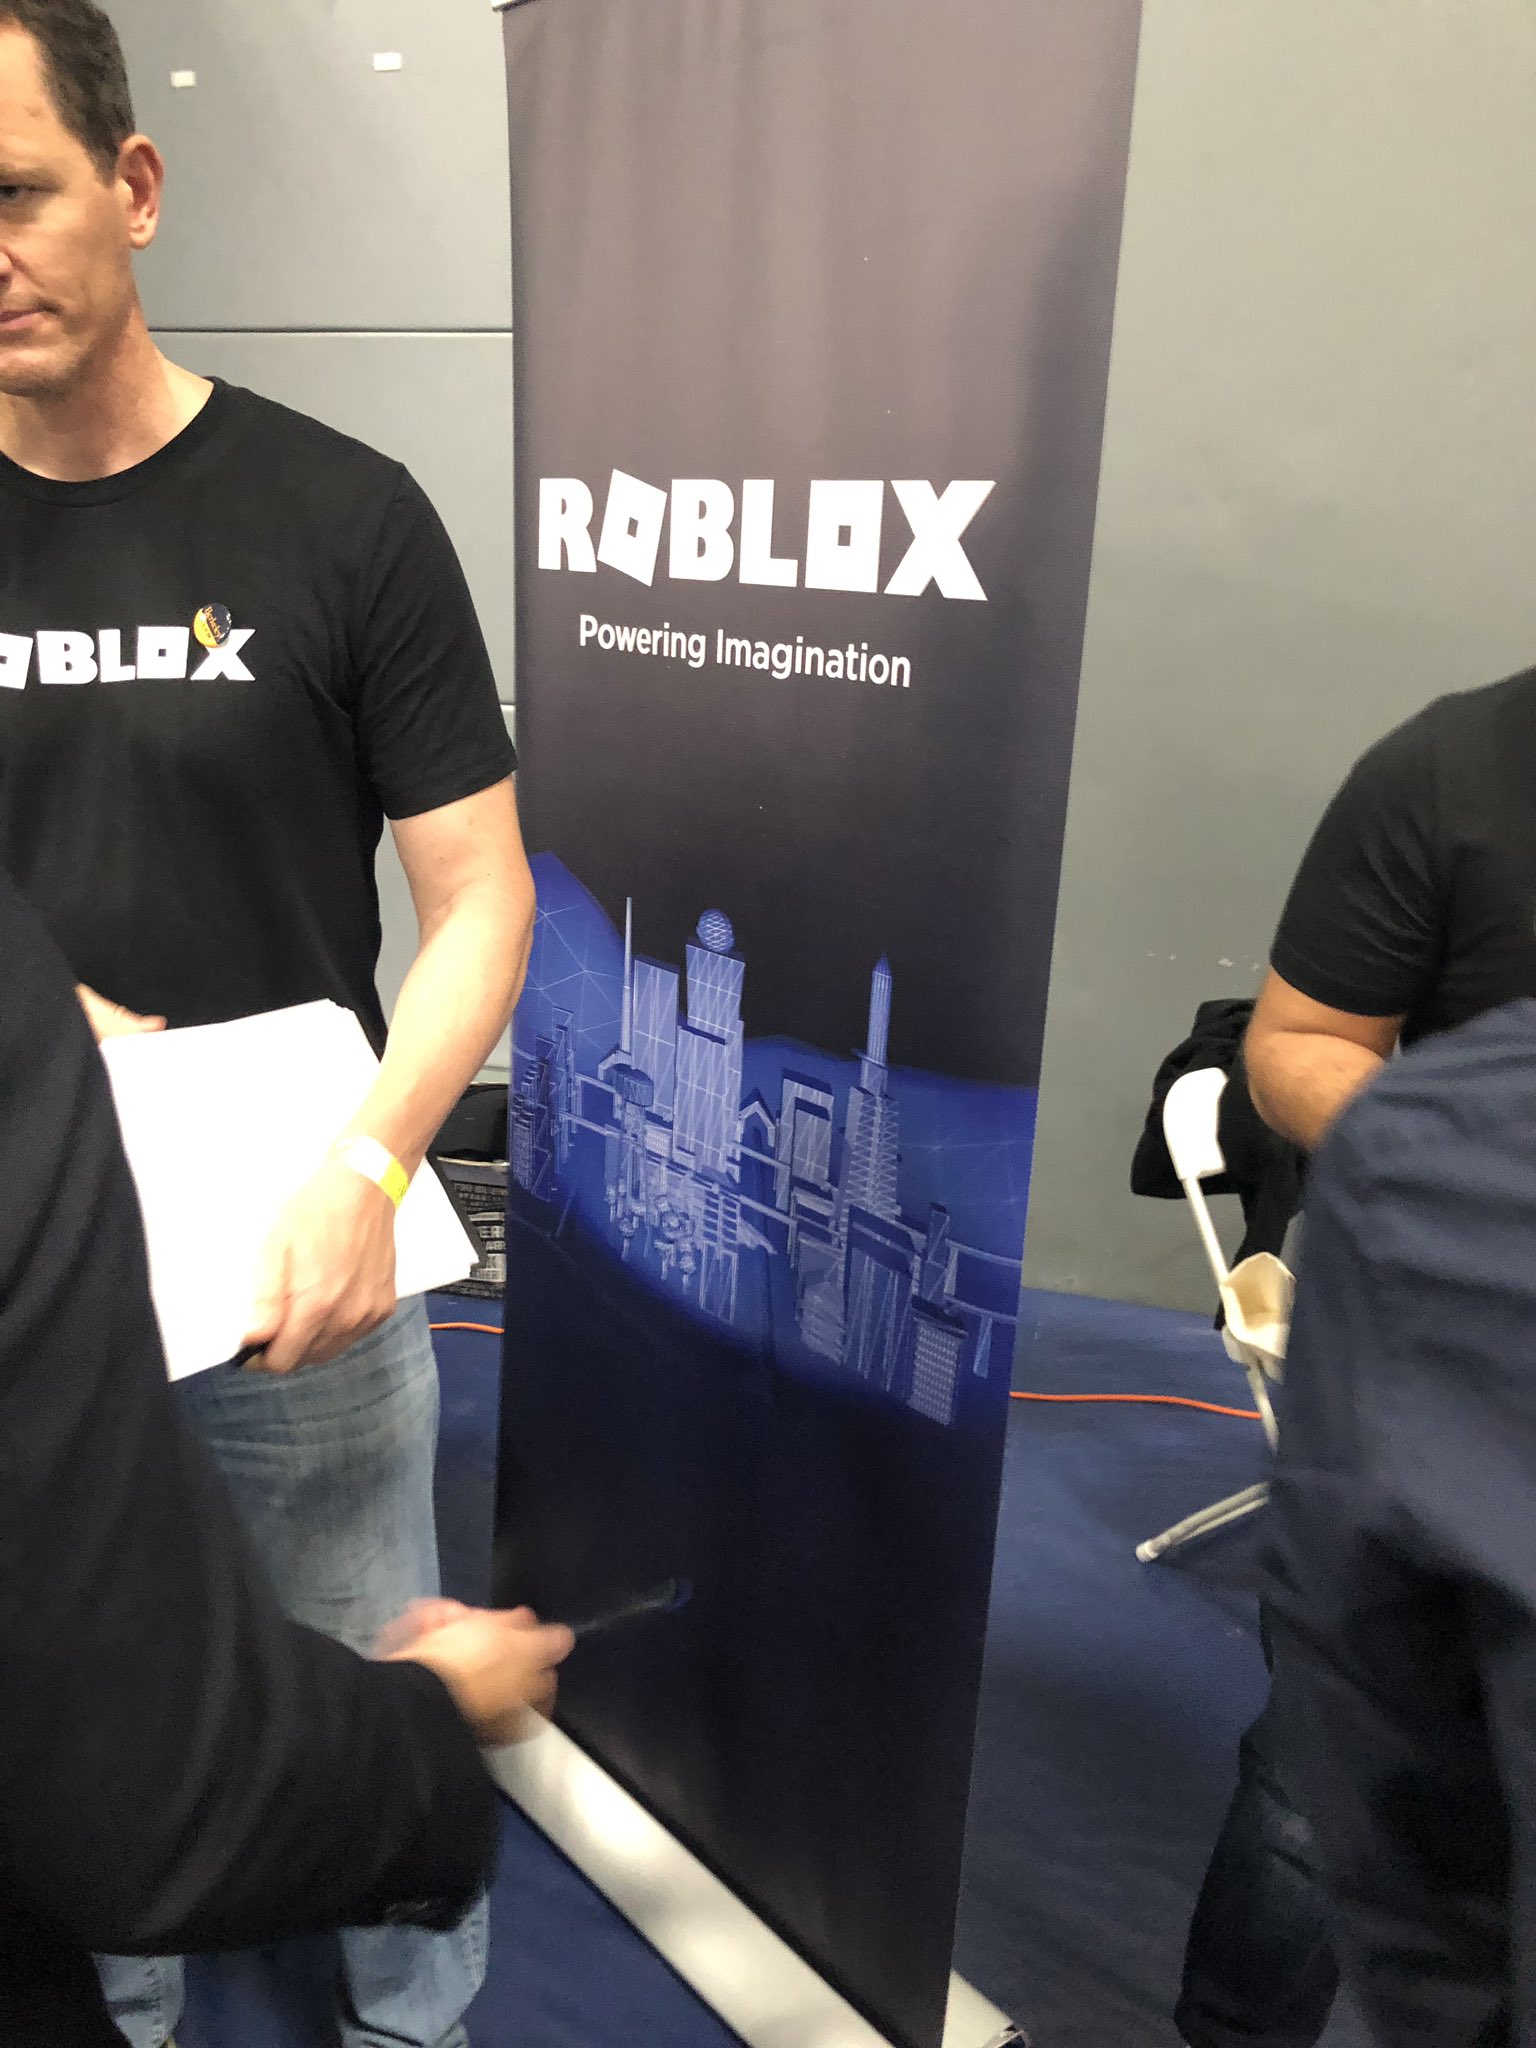 Phoenixsigns On Twitter Roblox Is At The Berkeley Job Fair - get unbanned t shirt roblox